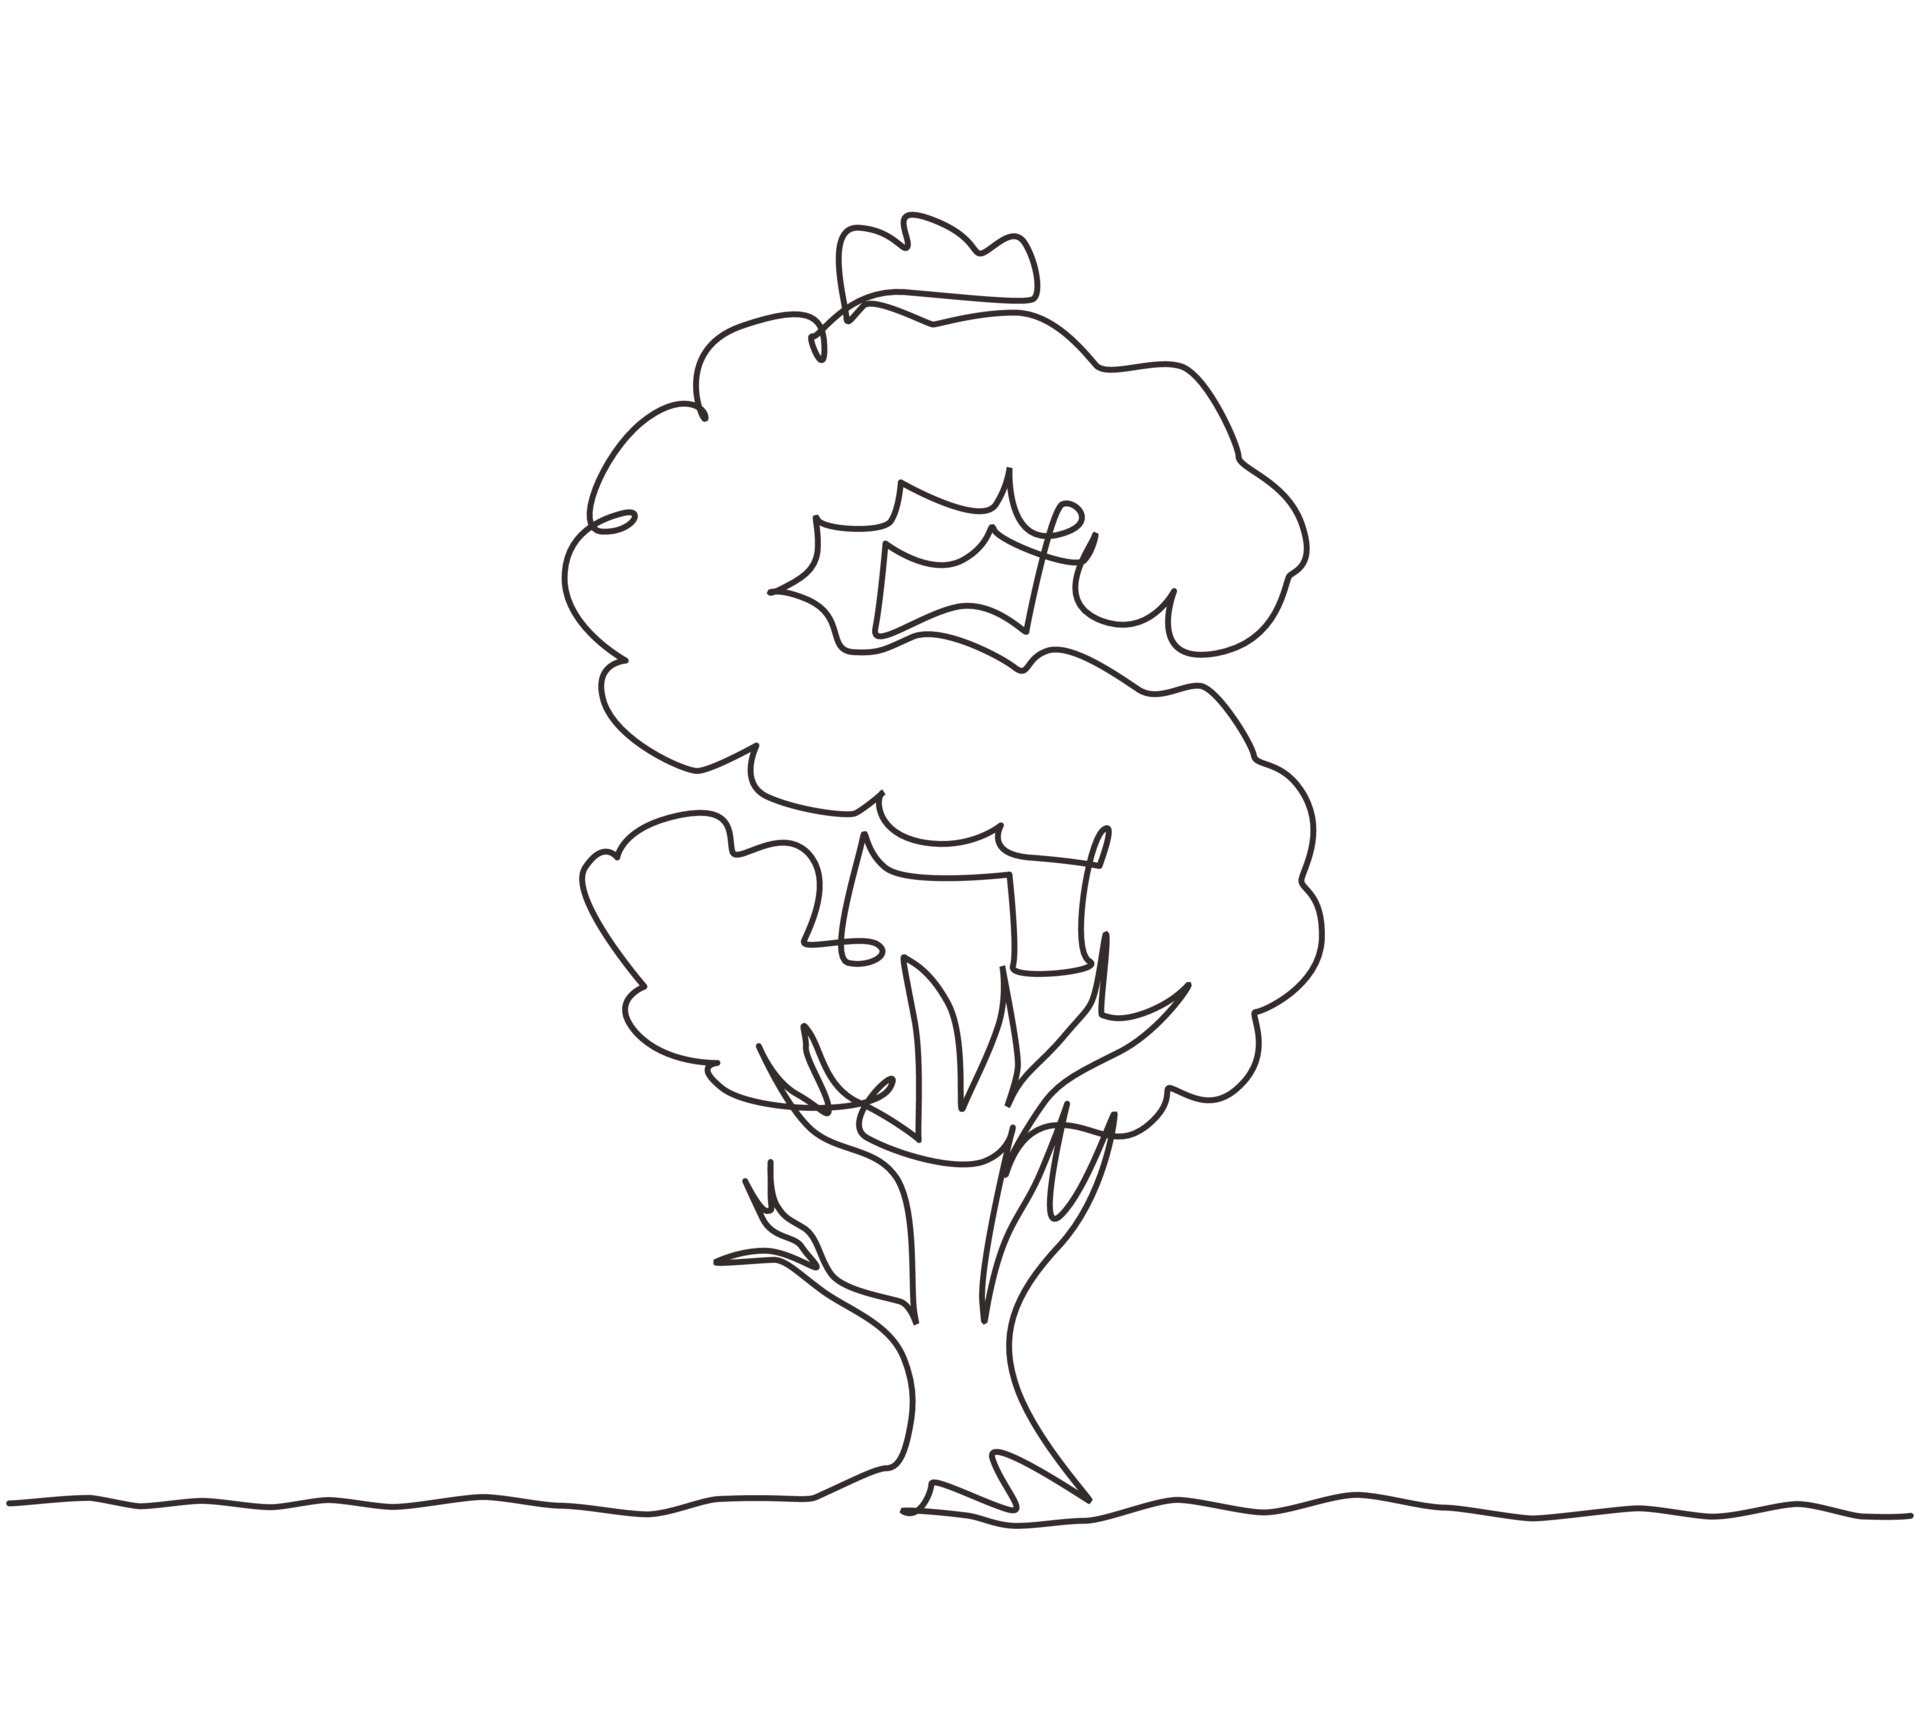 Money Tree Business Doodle Hand Drawn: Vector có sẵn (miễn phí bản quyền)  449472436 | Shutterstock